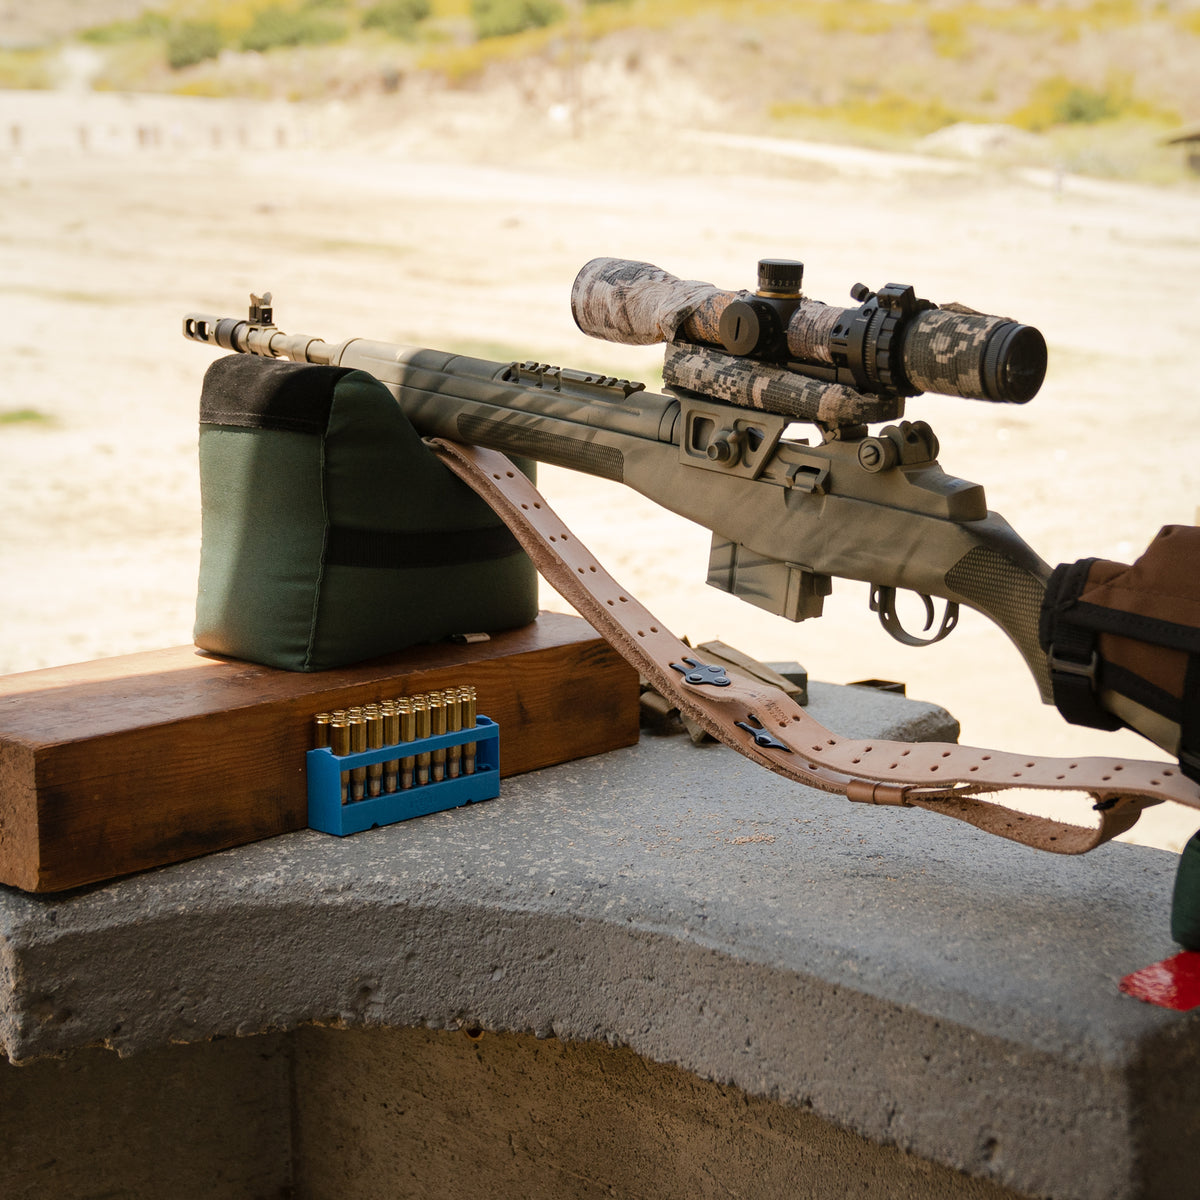 The ART scope on a classic M1A setup